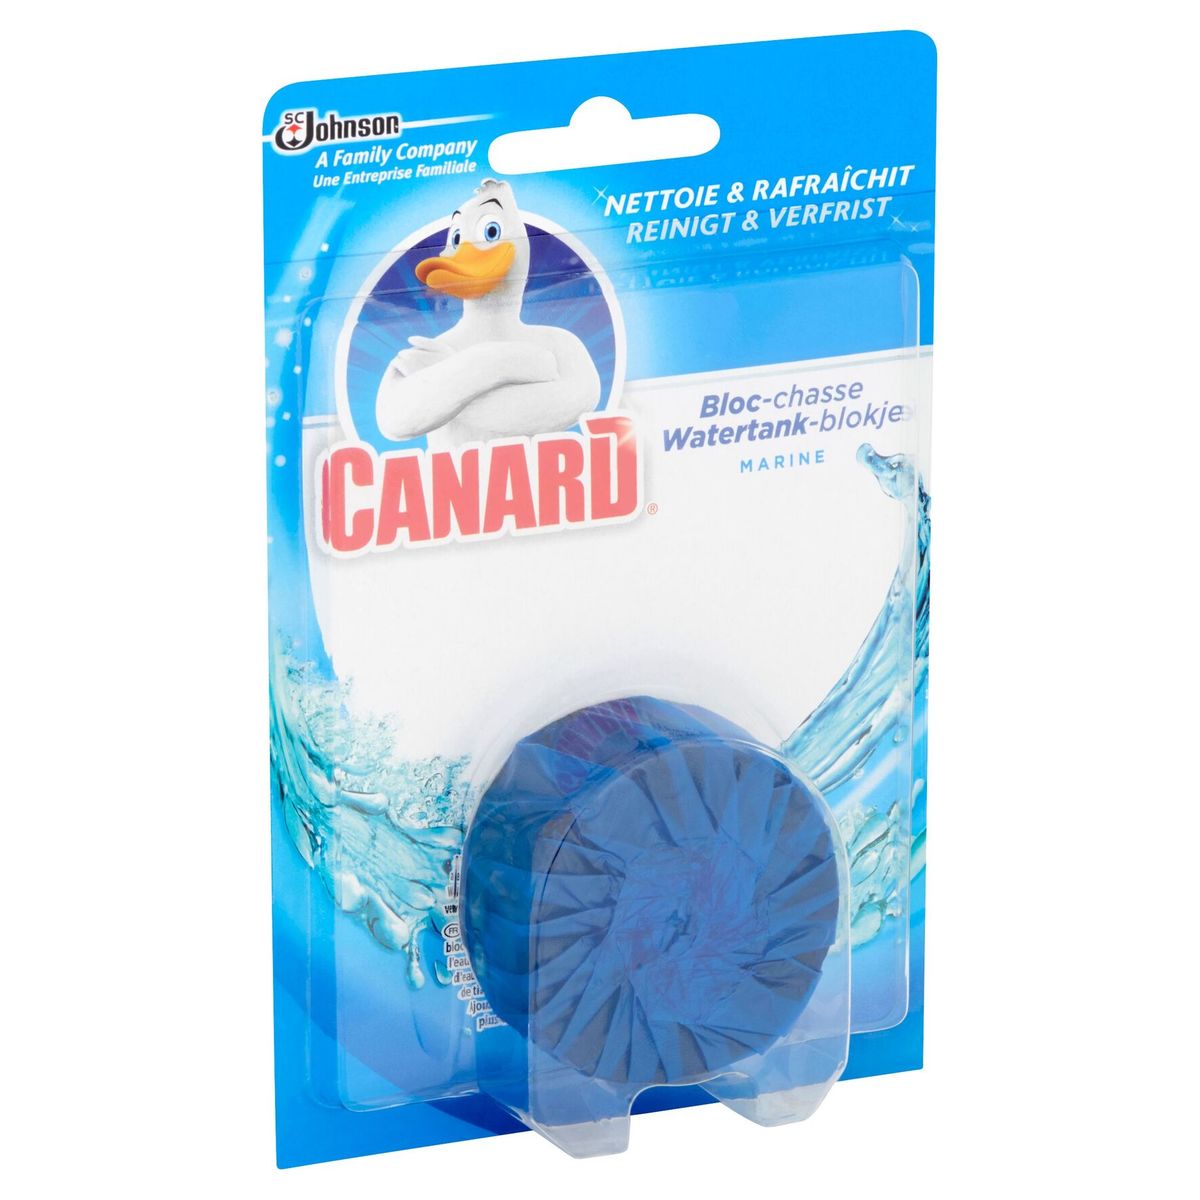 Canard®-Watertank-Blokje Marine -50 g